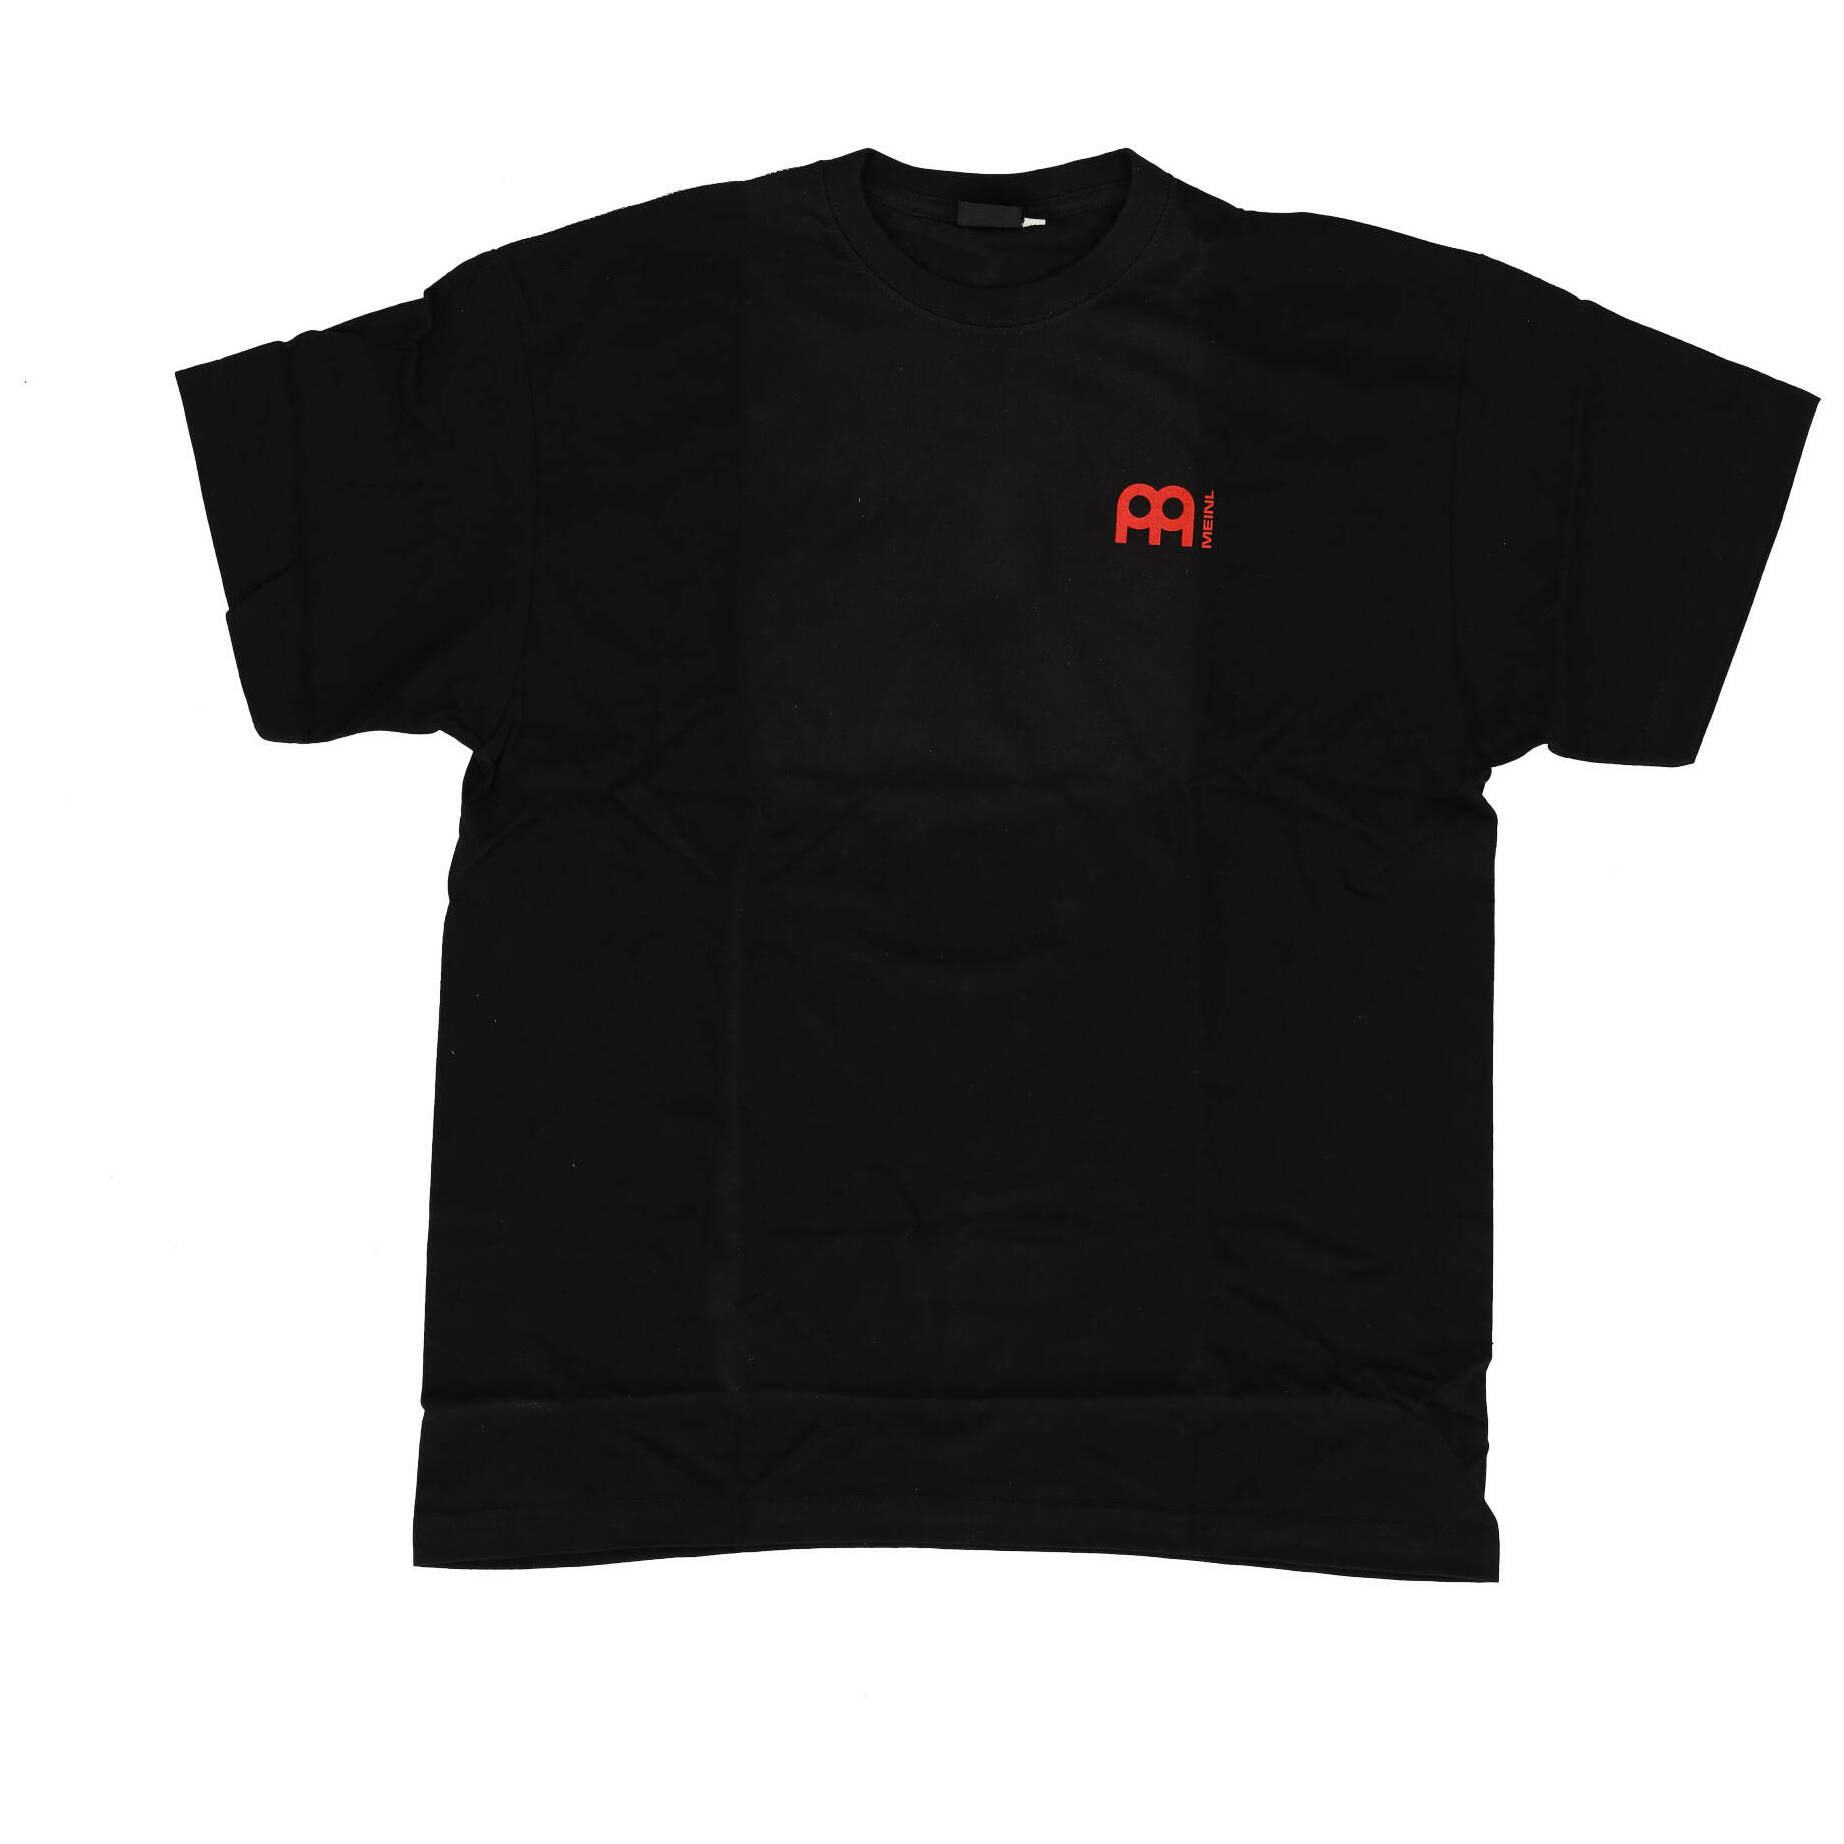 Meinl Cymbals M42-L - T-shirt schwarz - Logo rot - Größe L 